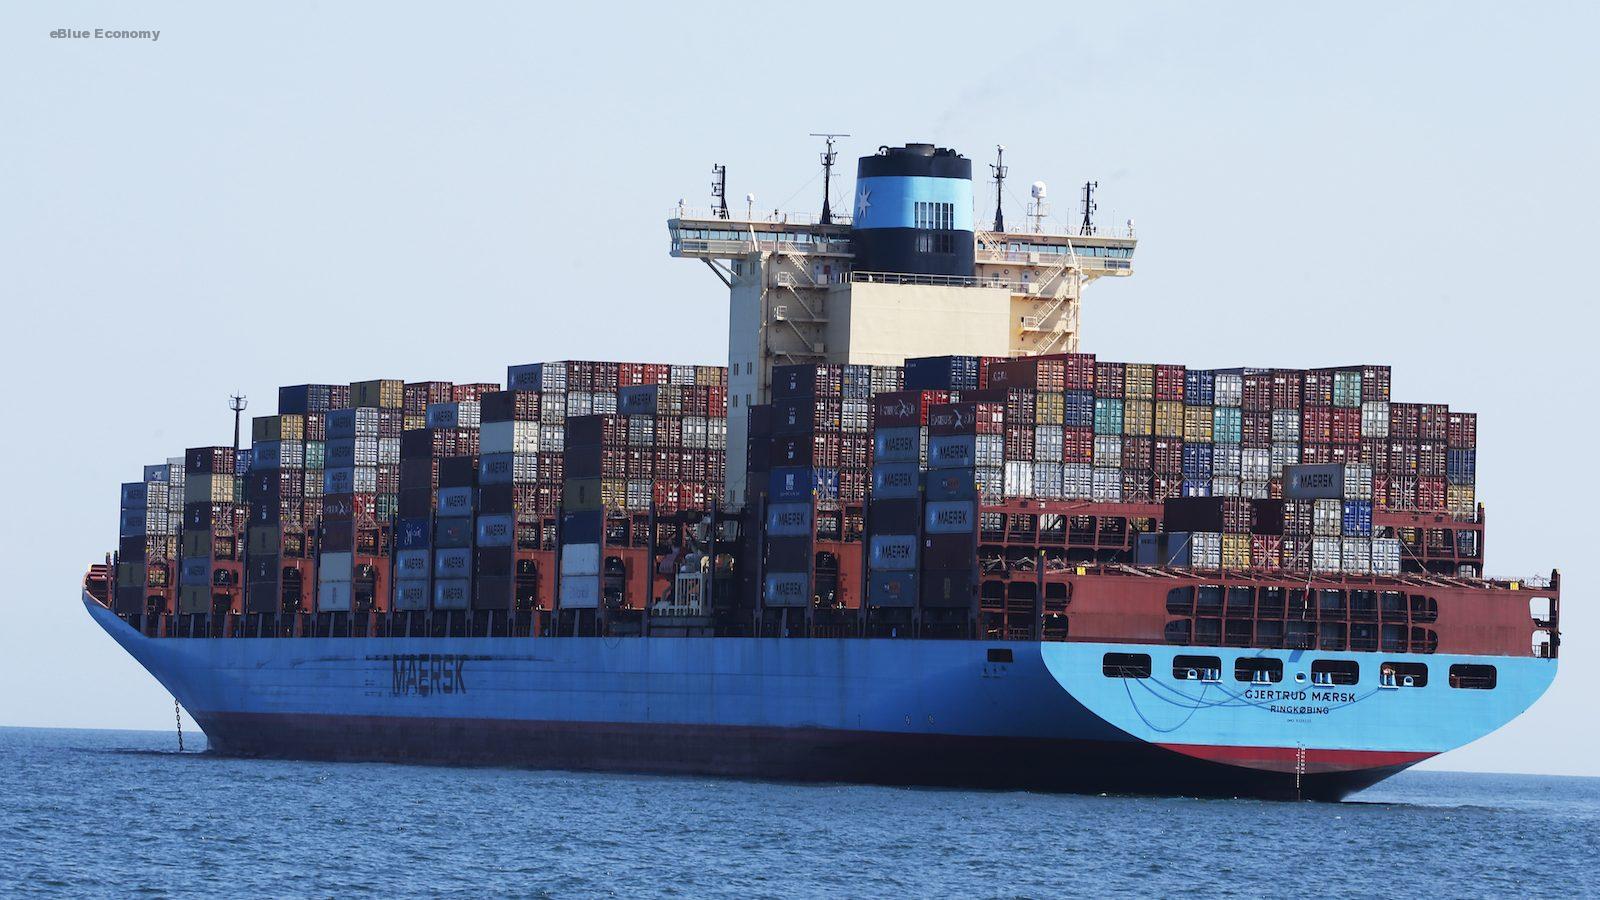 eBlue_economy_Linking maritime governance with maritime security